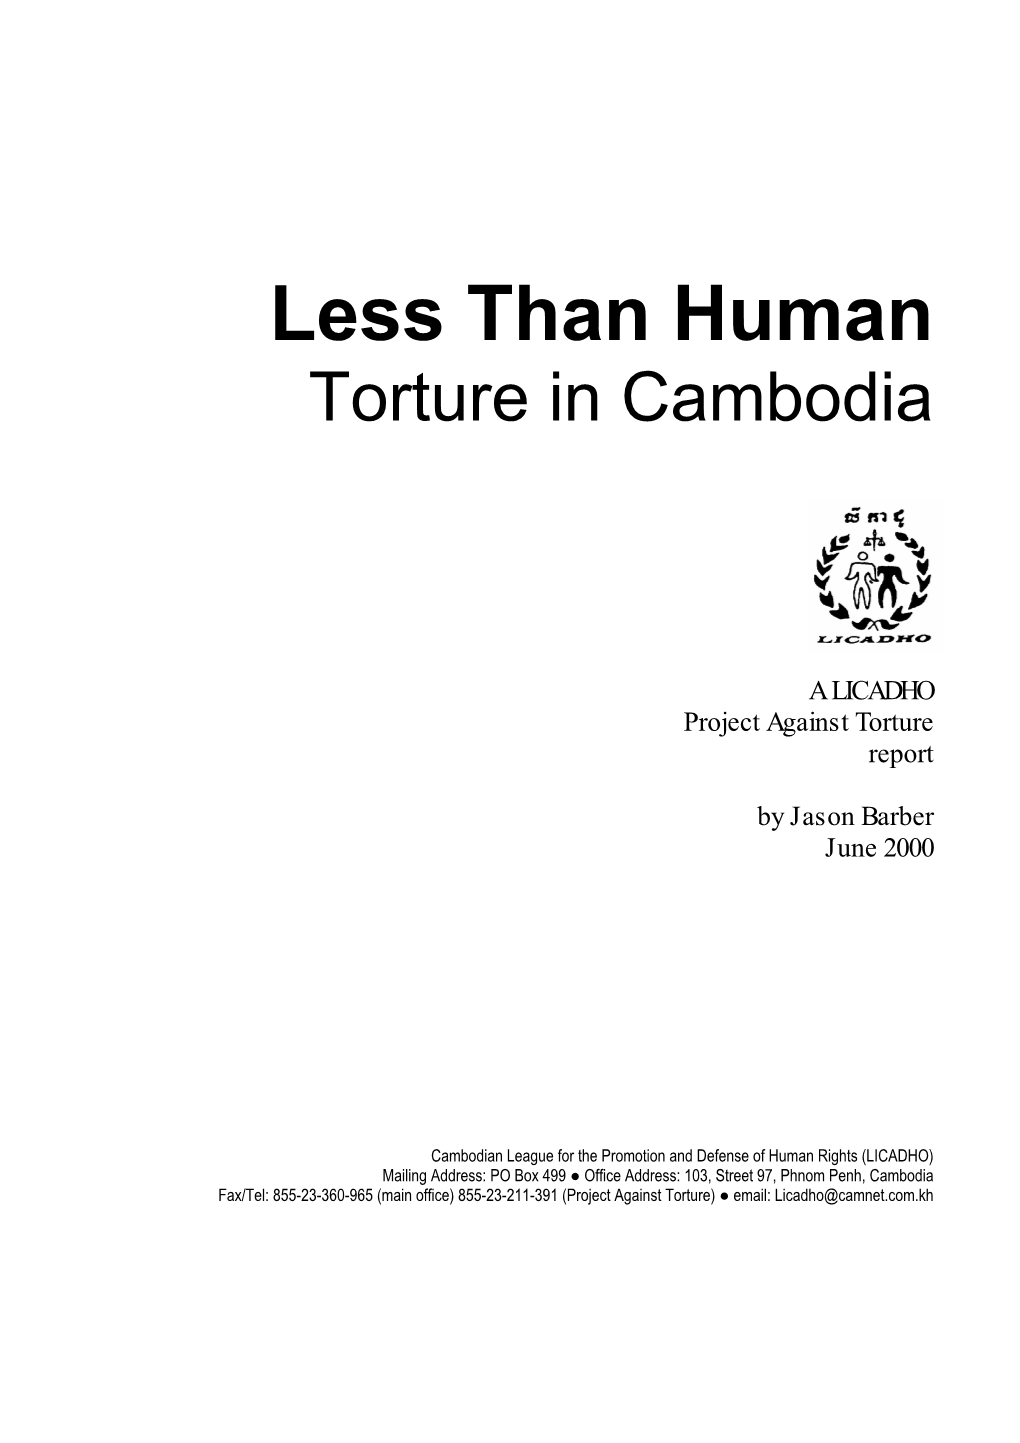 Torture in Cambodia